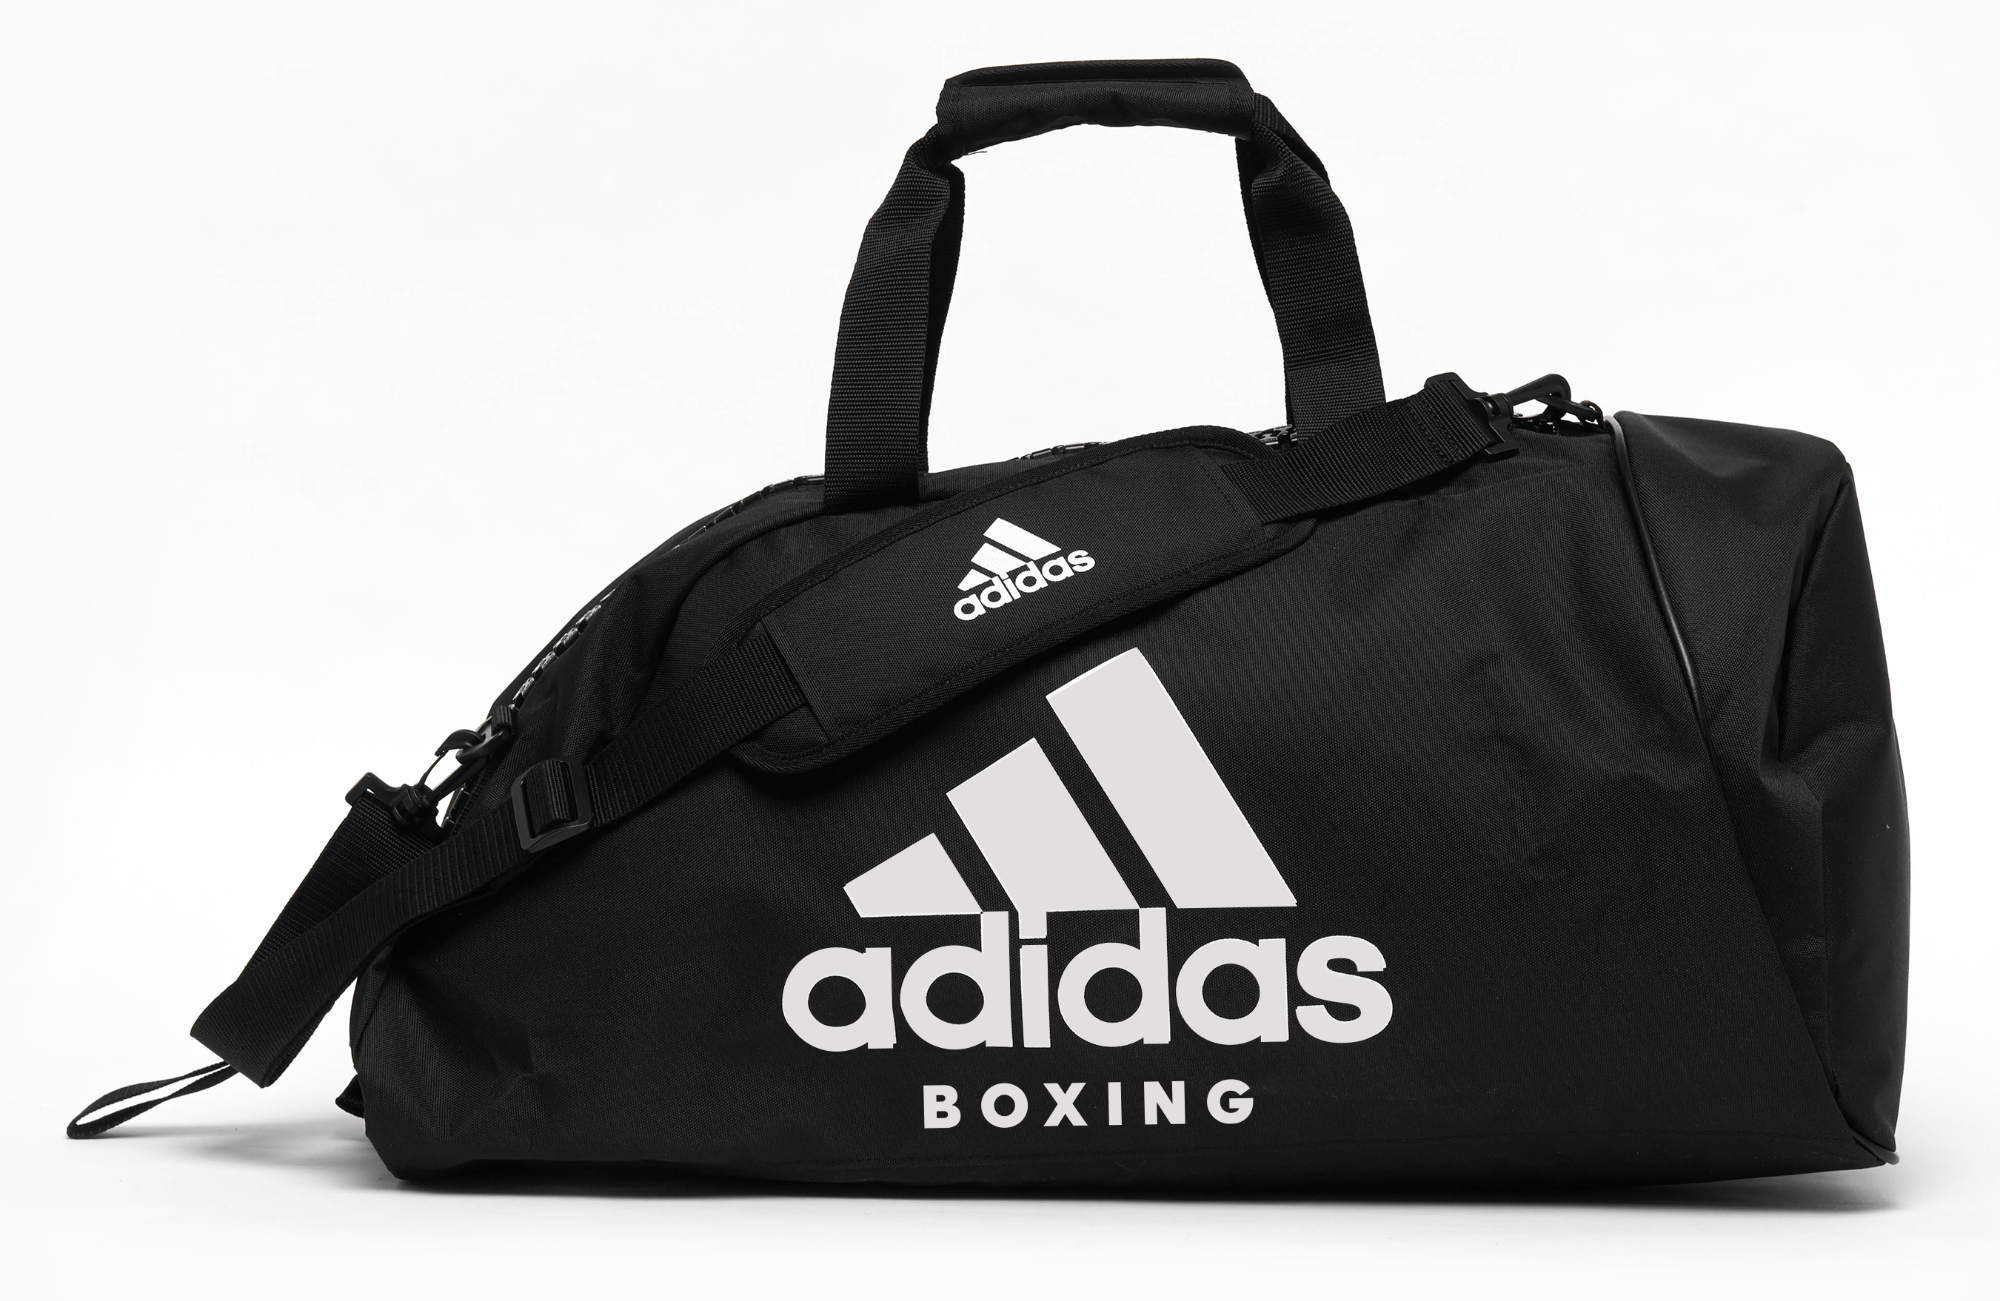 adidas 2in1 Bag Boxing Nylon adiACC052B, black/white